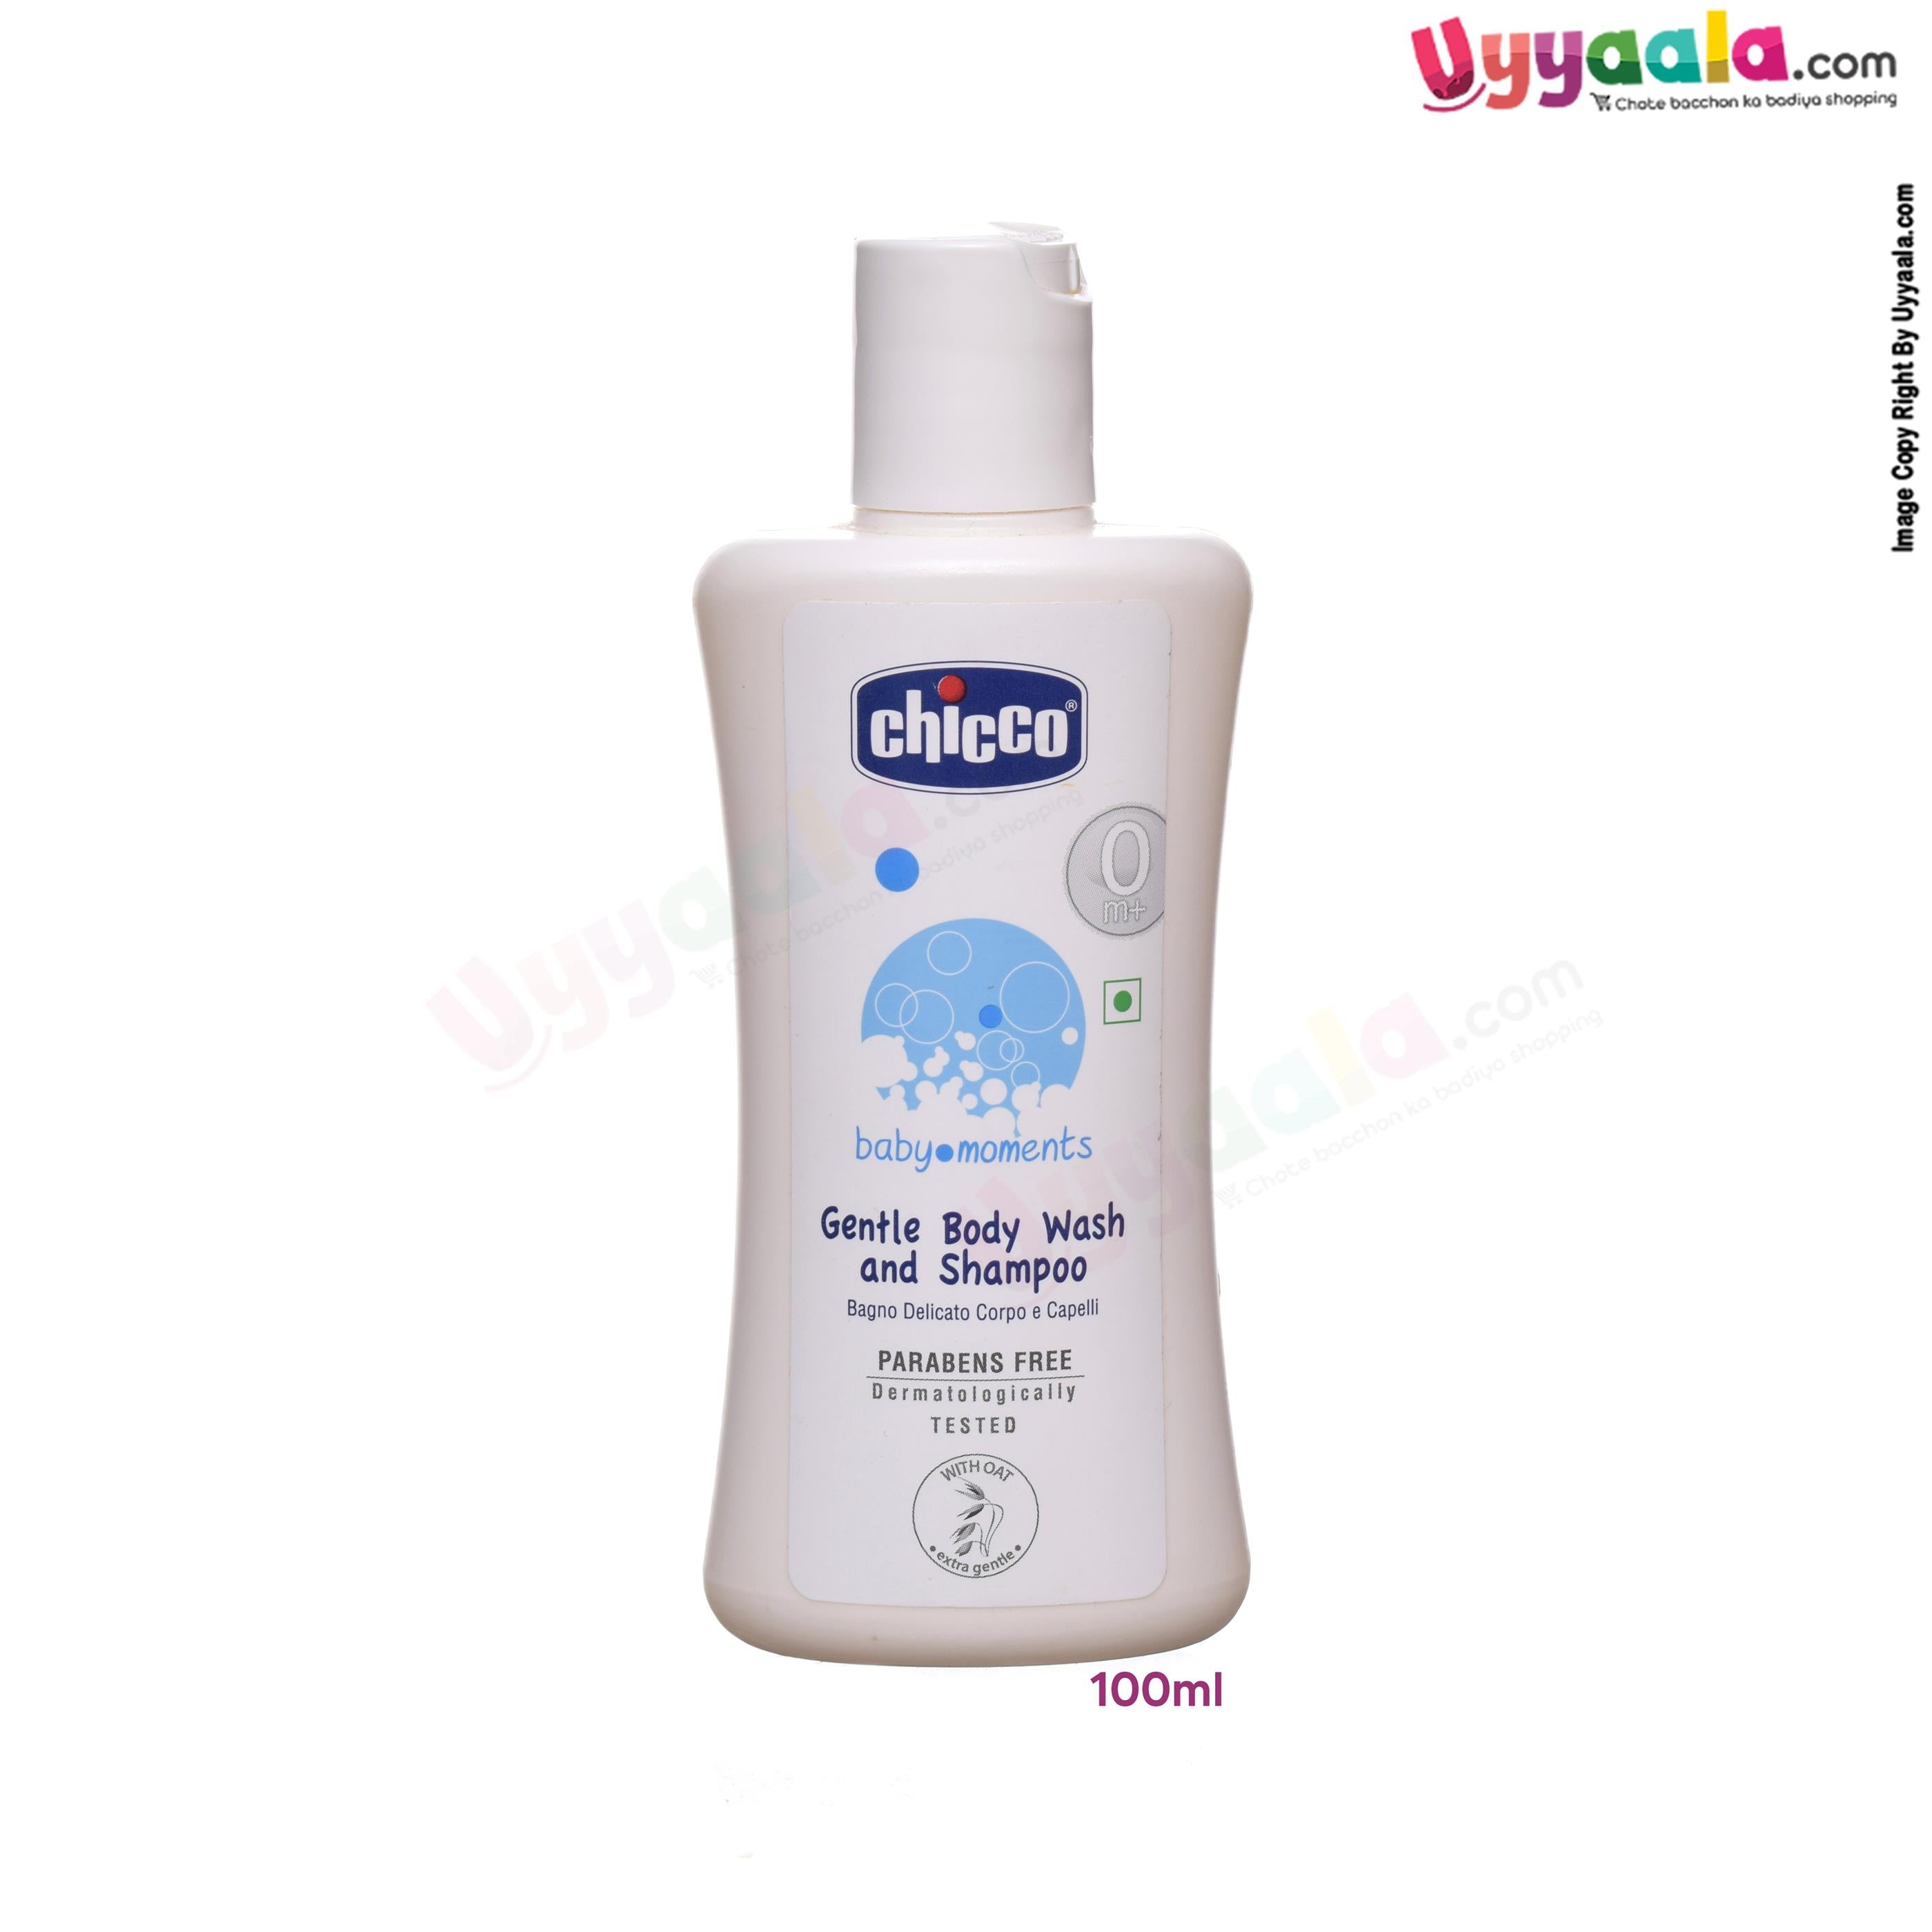 CHICCO Baby moments gentle body wash & shampoo -100ml